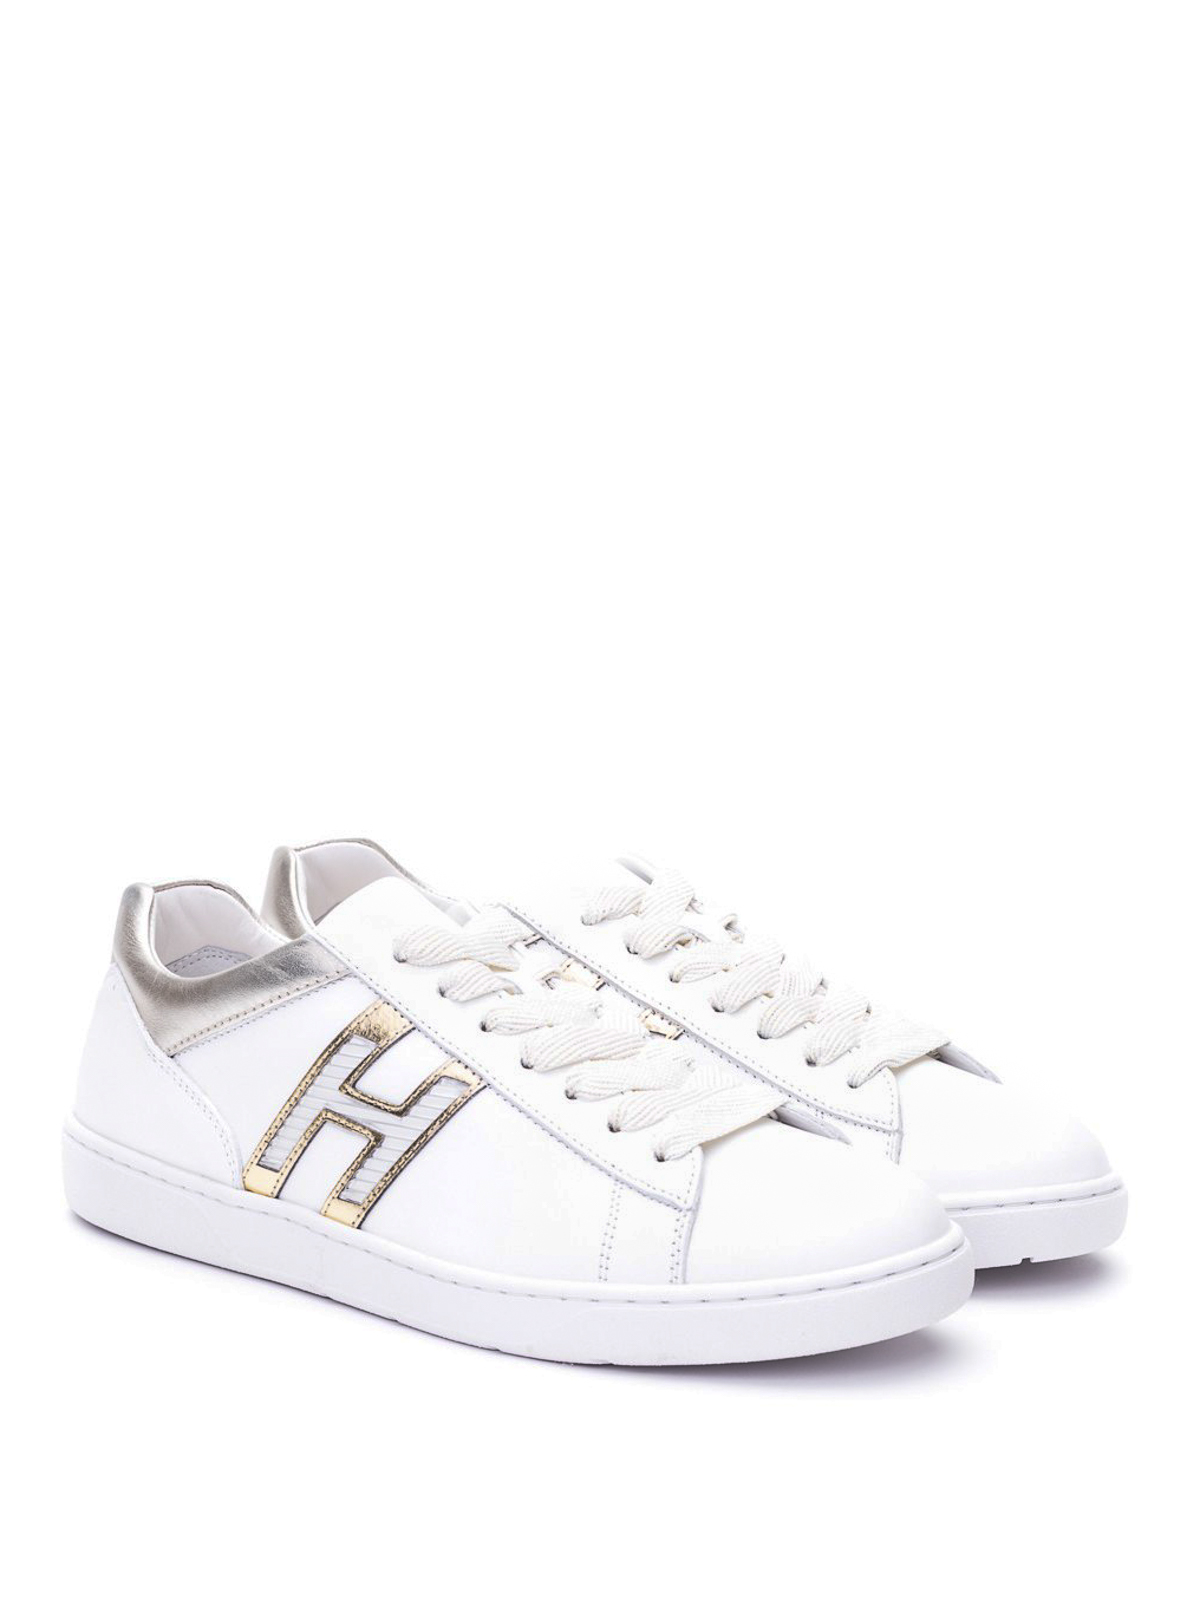 Hogan - H327 white sneakers - trainers - GYW3270CW80I6W1556 | iKRIX.com